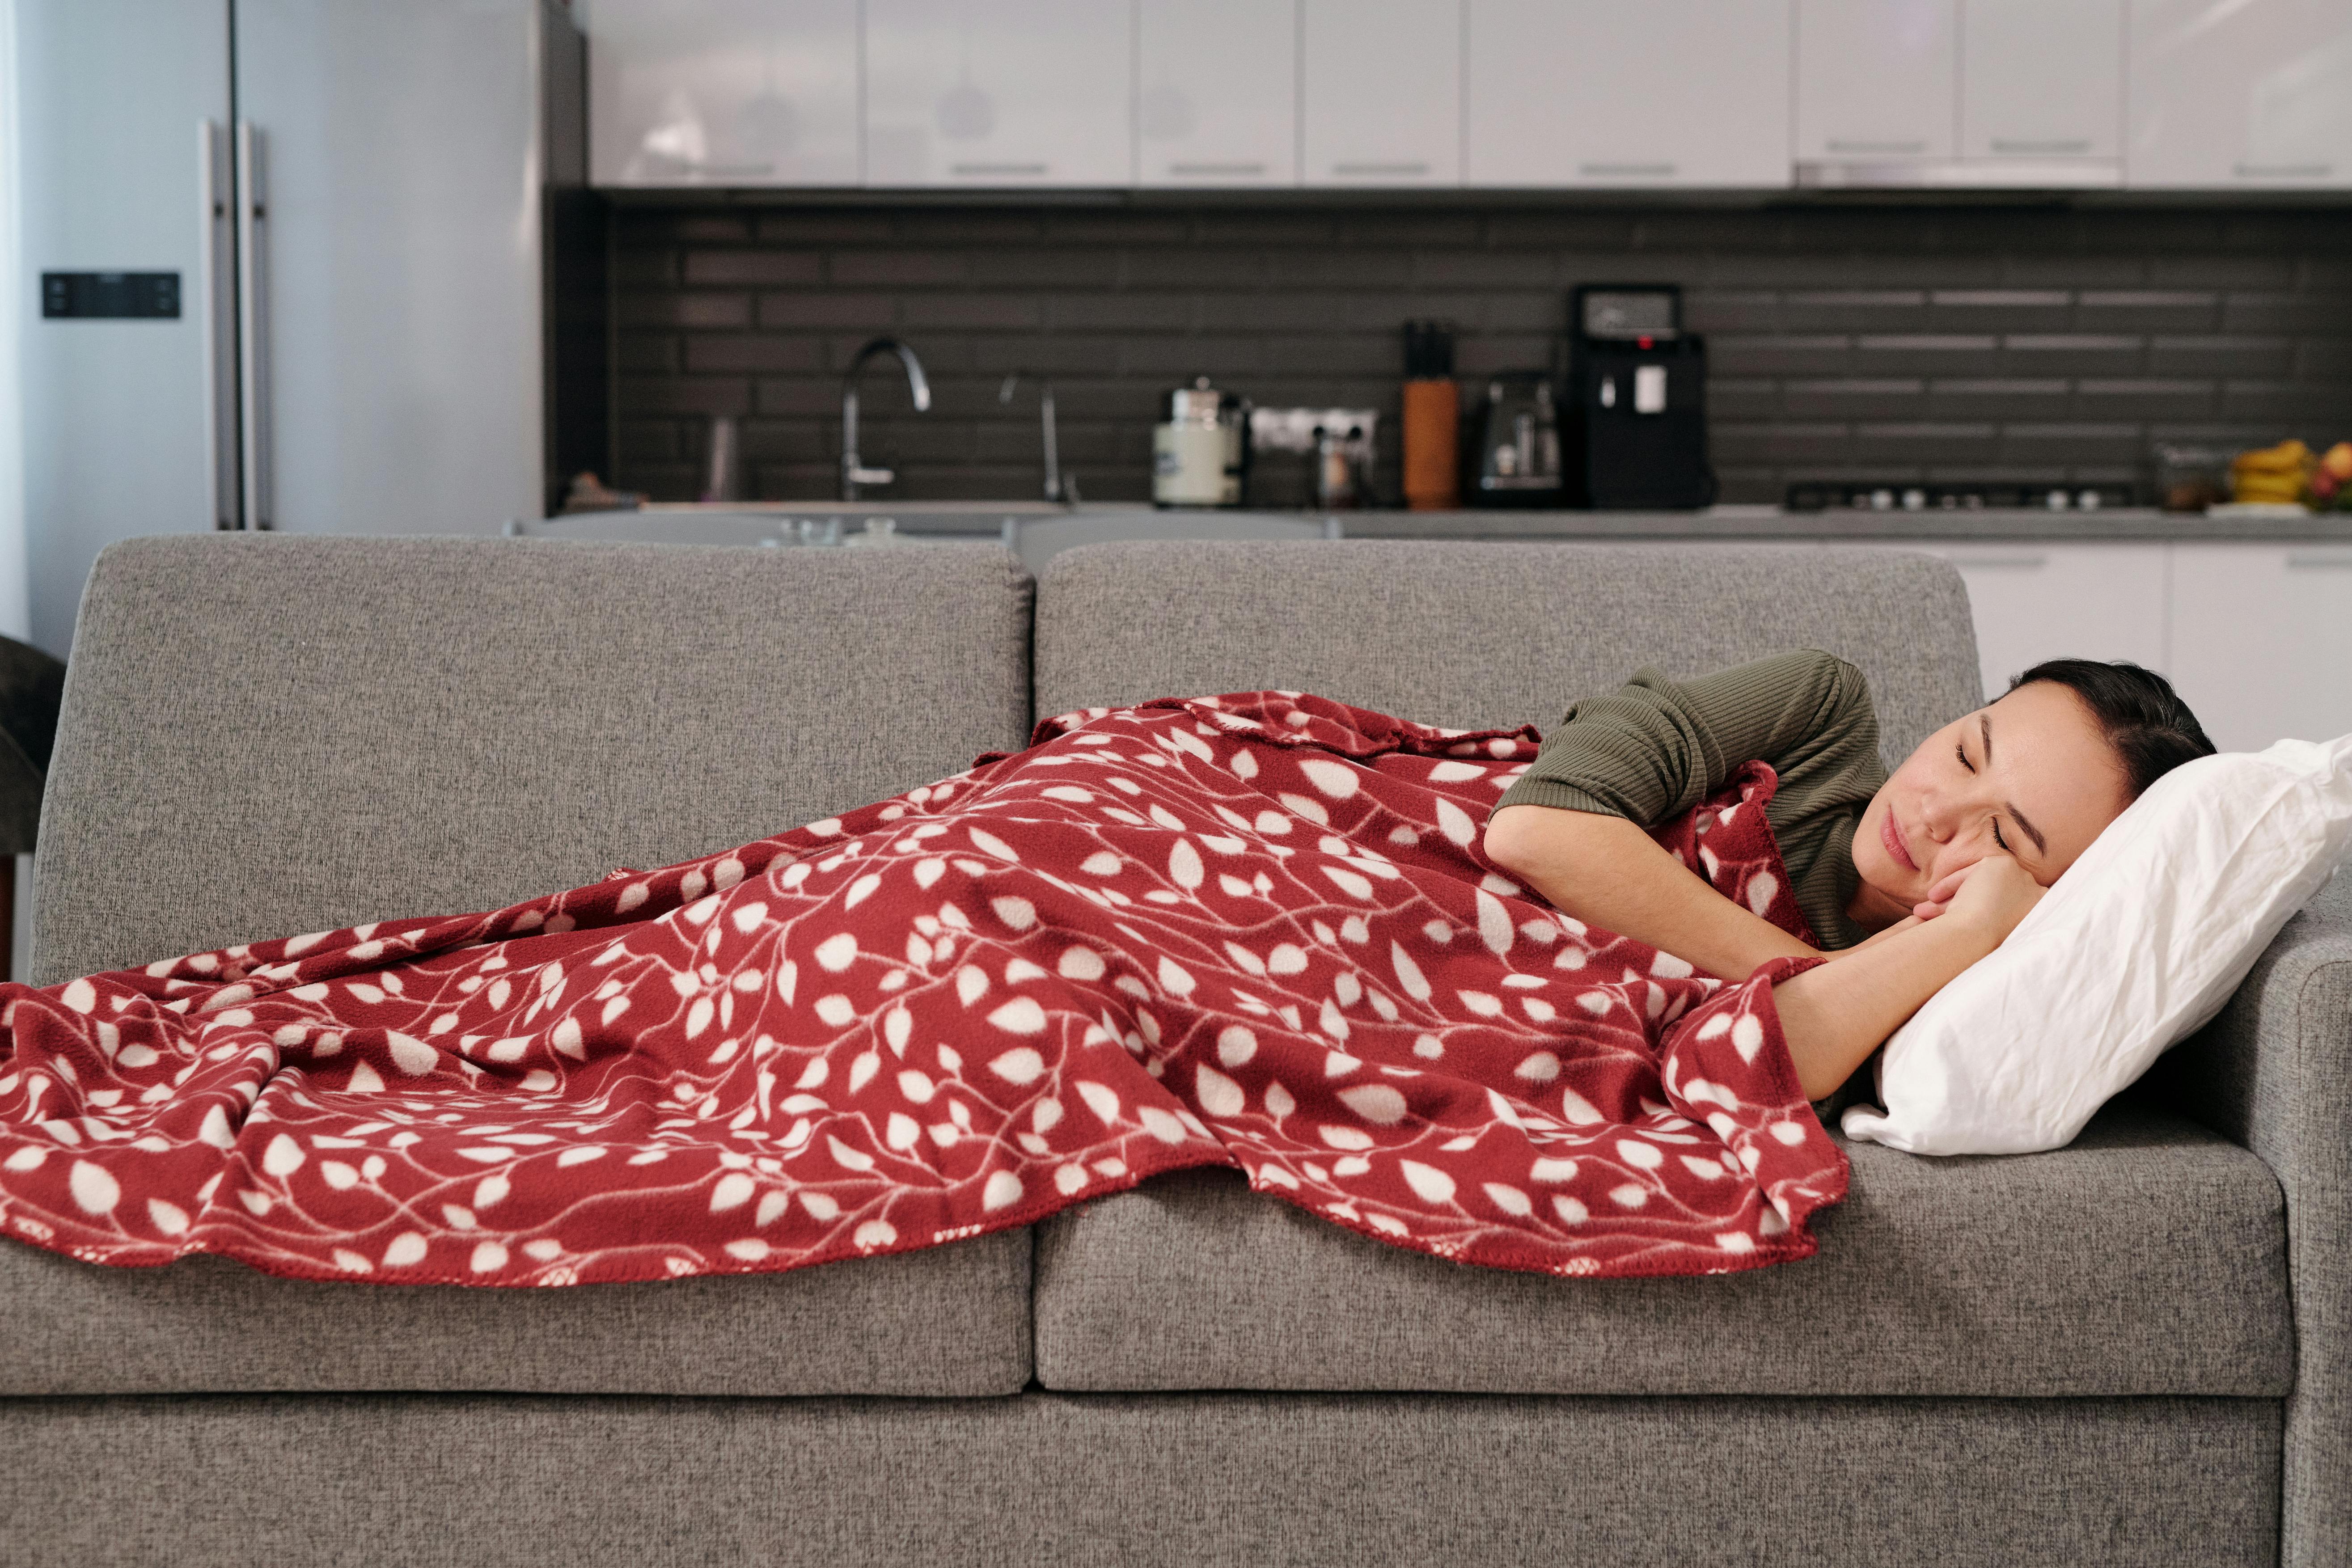 A woman sleeping on a sofa | Source: Pexels